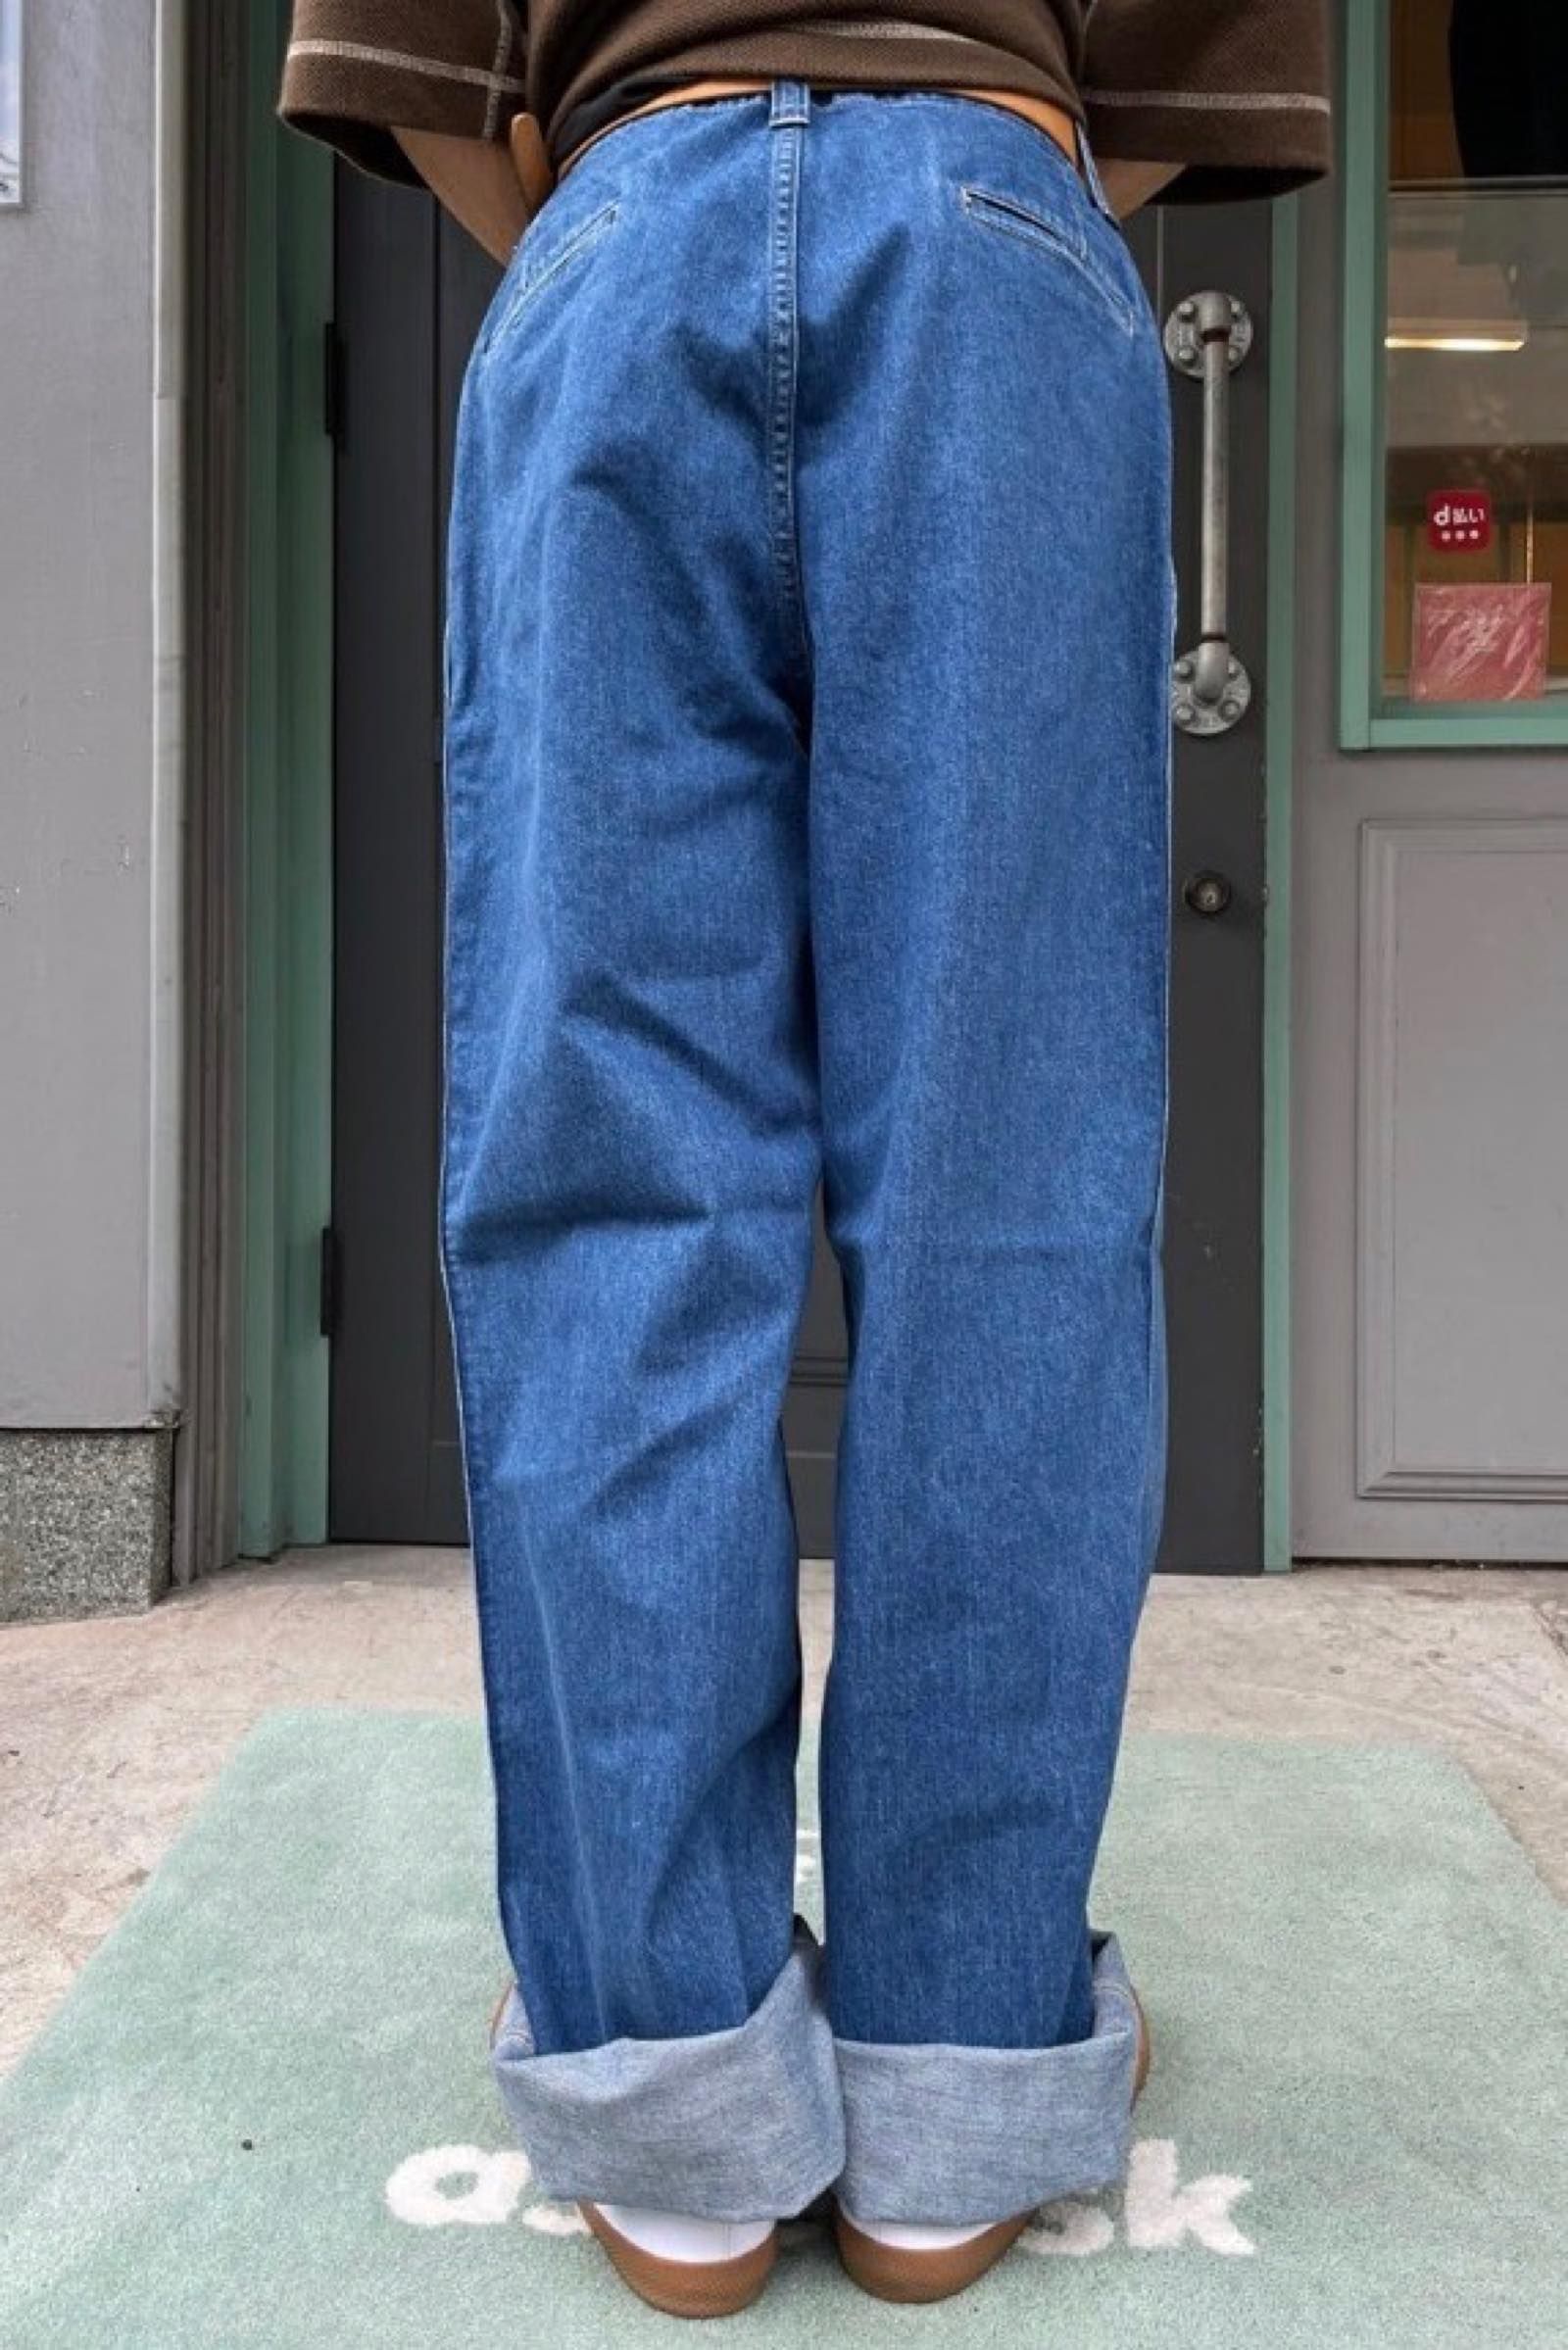 E.TAUTZ - core field trousers denim vintage wash indigo 21aw